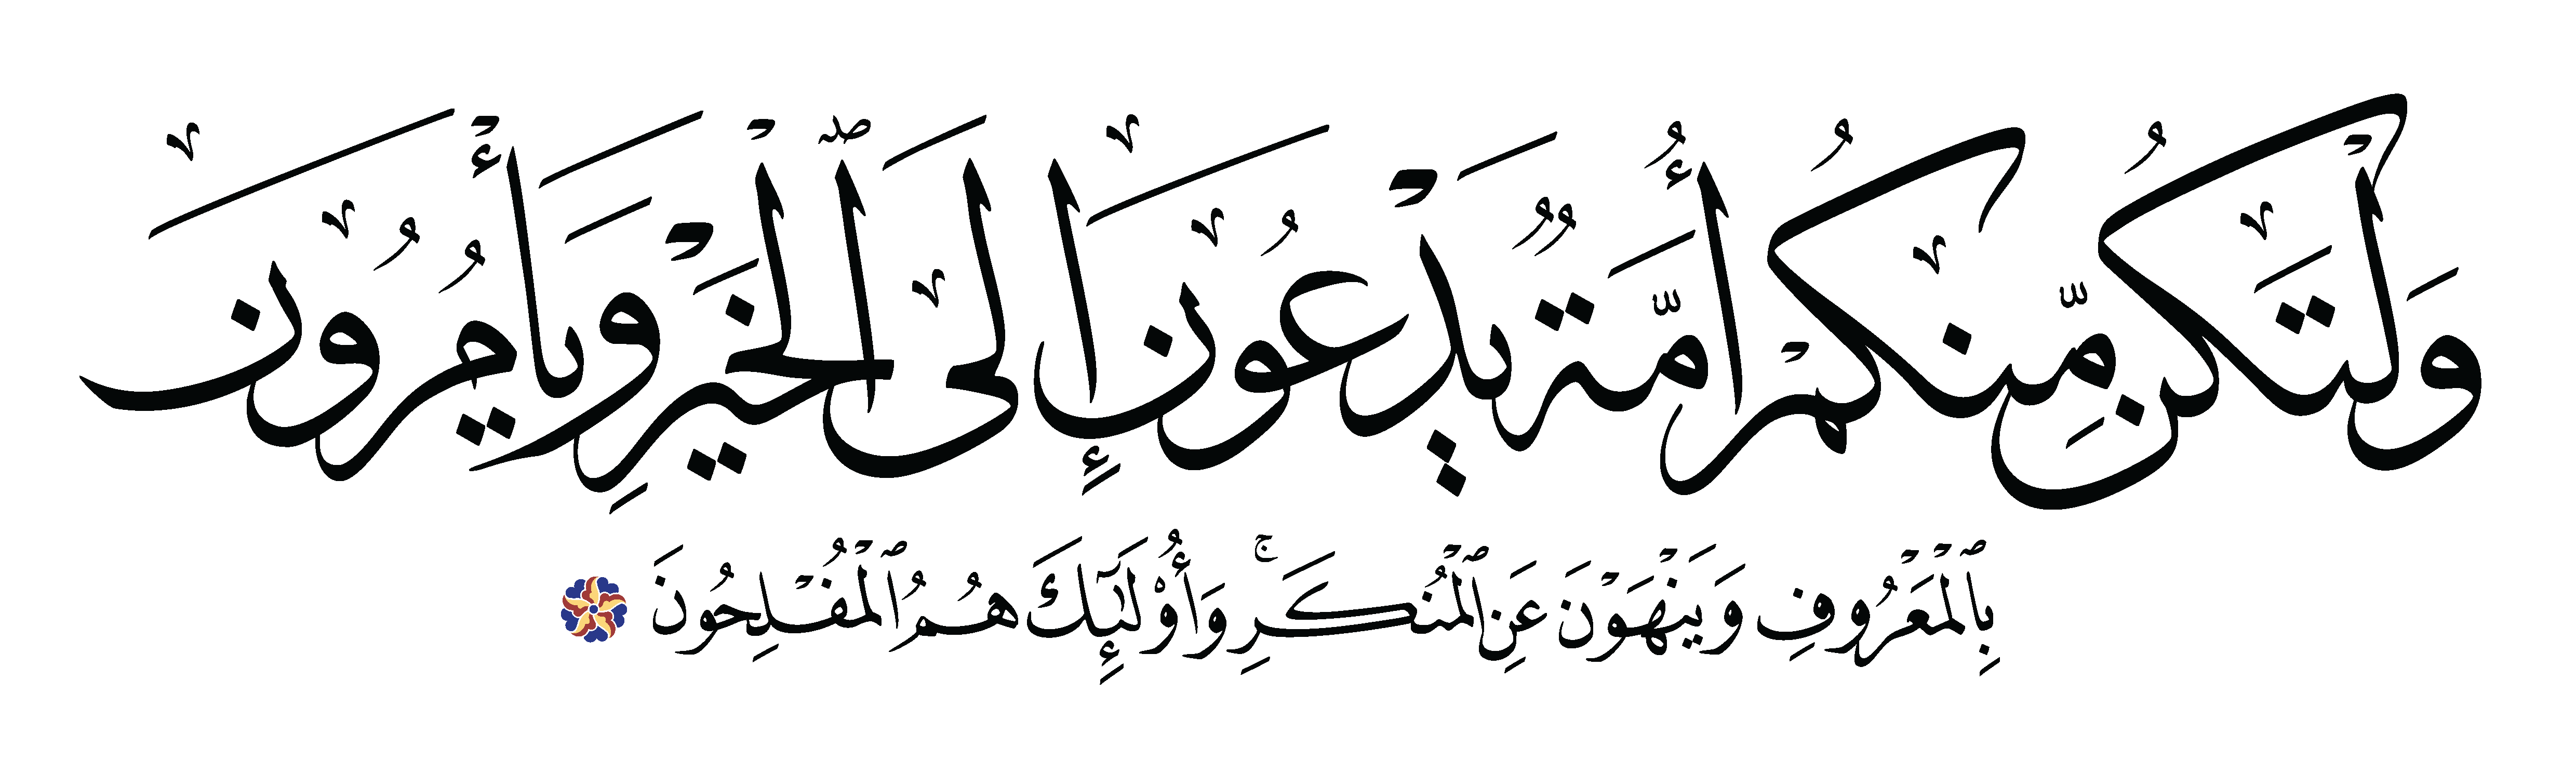 Surah Al Imran Ayat 104 Say Hafiz 3 Ali Imran 103 Dubai Khalifa 104